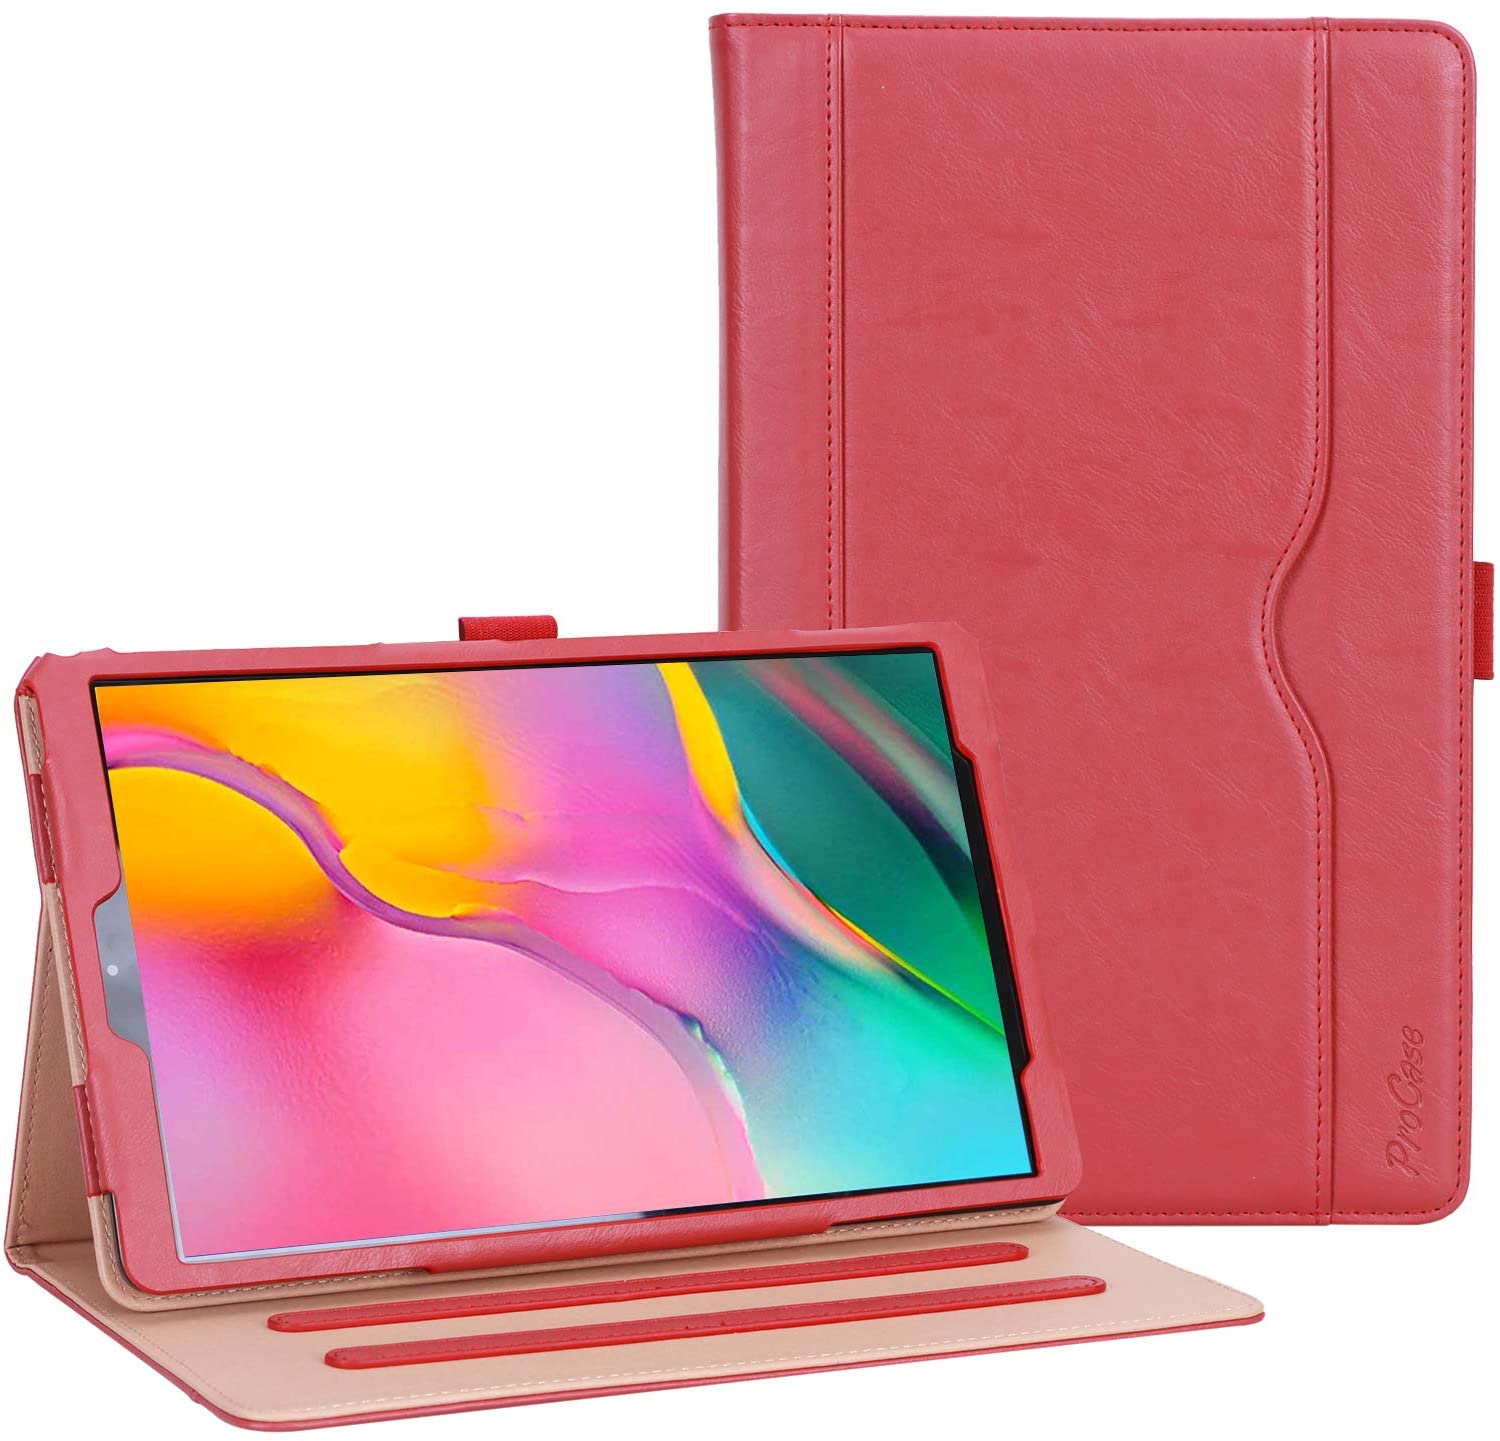 Galaxy Tab A 10.1 2019 T510 Leather Folio Case | ProCase red